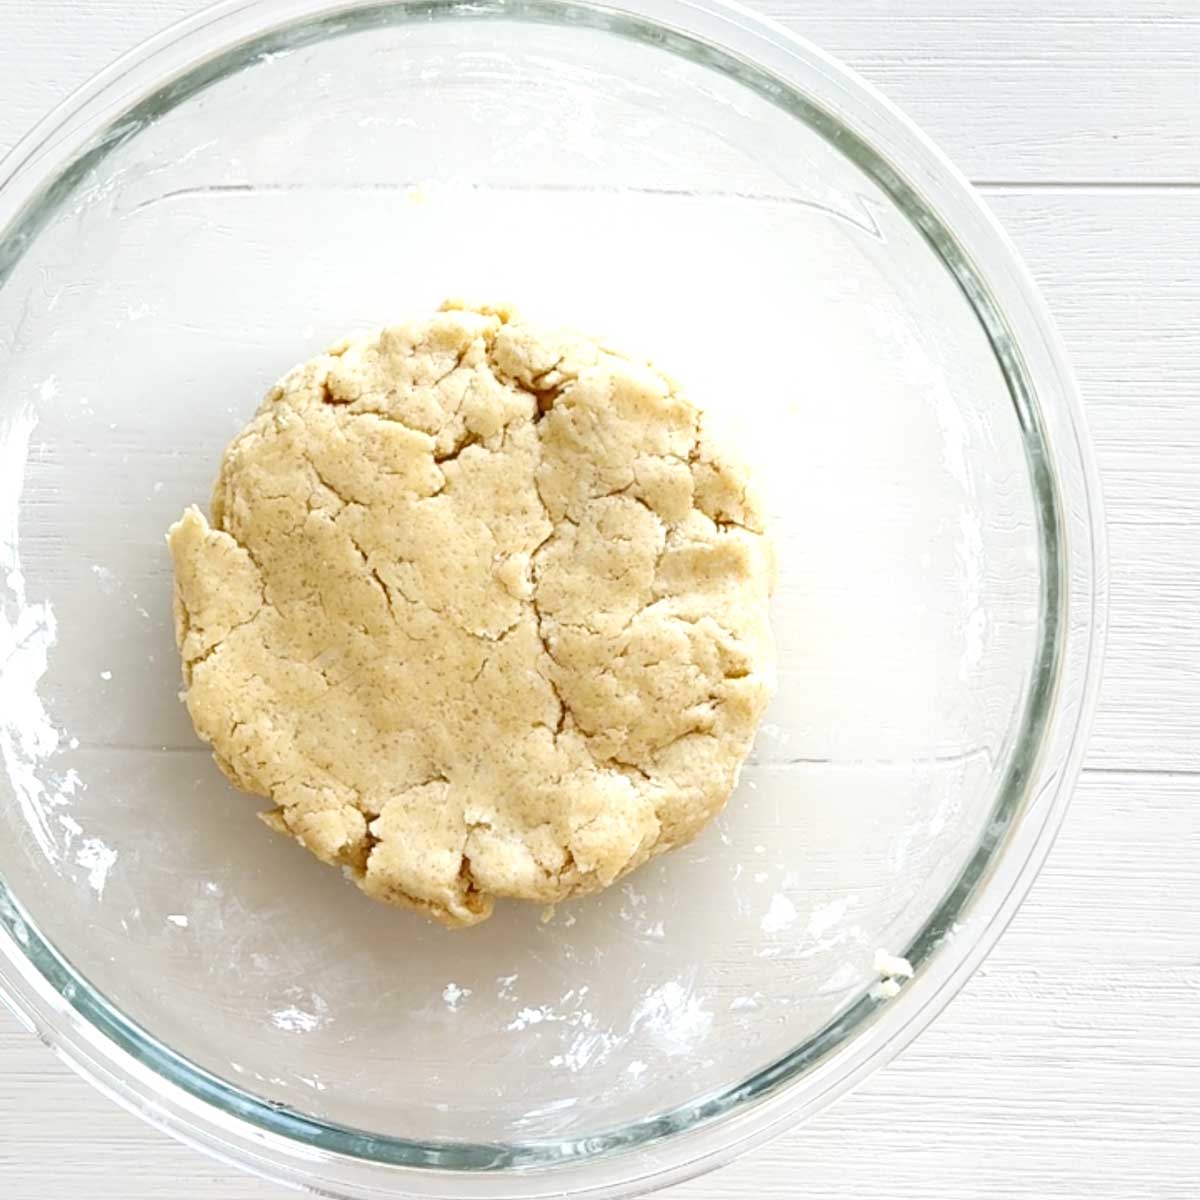 How to Make Vegan Scones Using Coconut Oil - Cauliflower Everything Bagel Scones